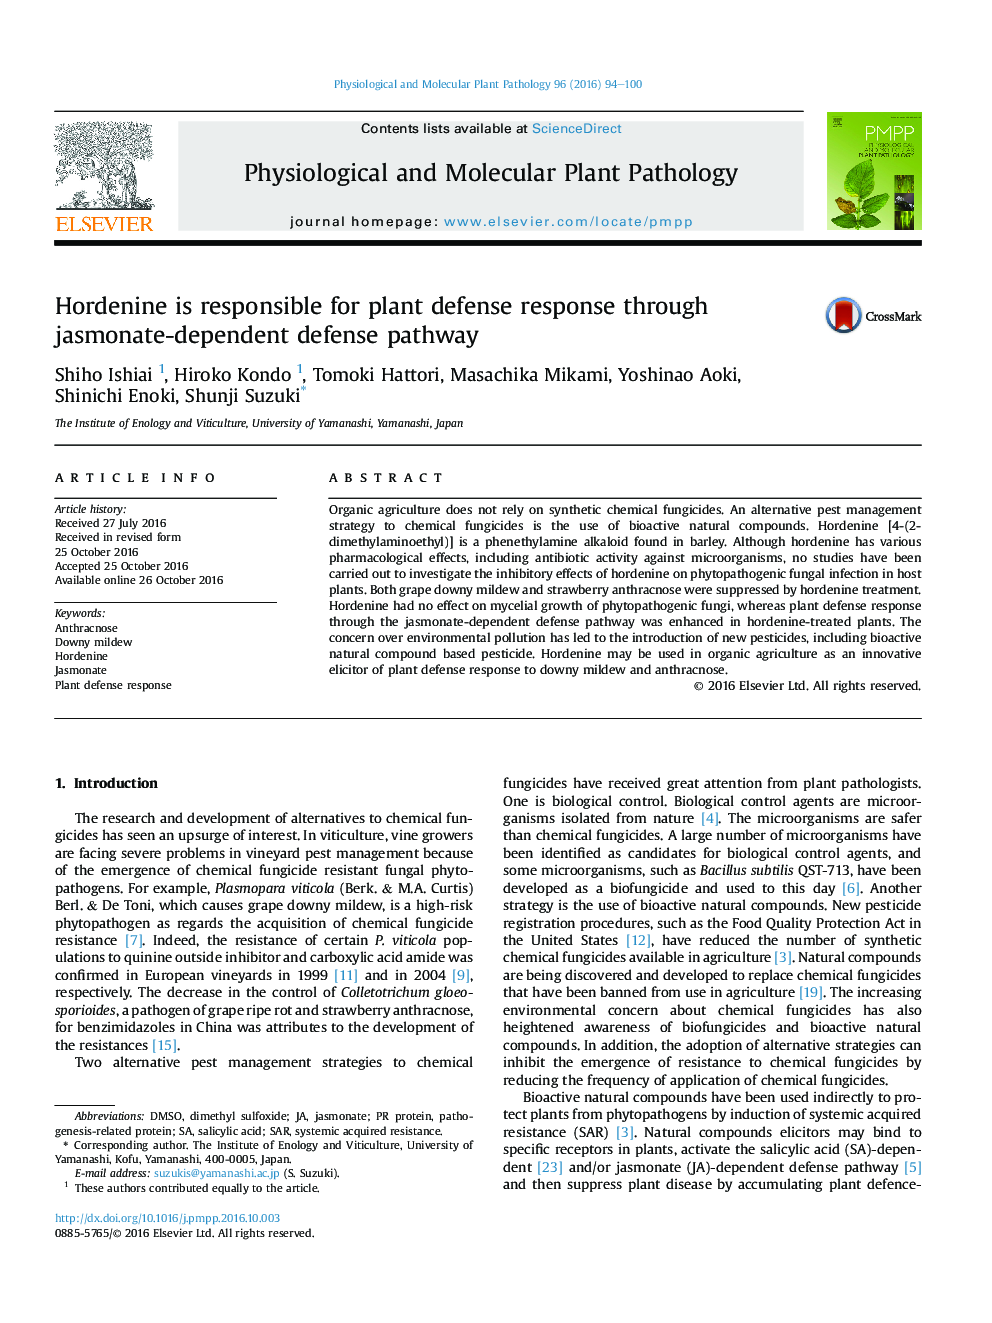 Hordenine is responsible for plant defense response through jasmonate-dependent defense pathway